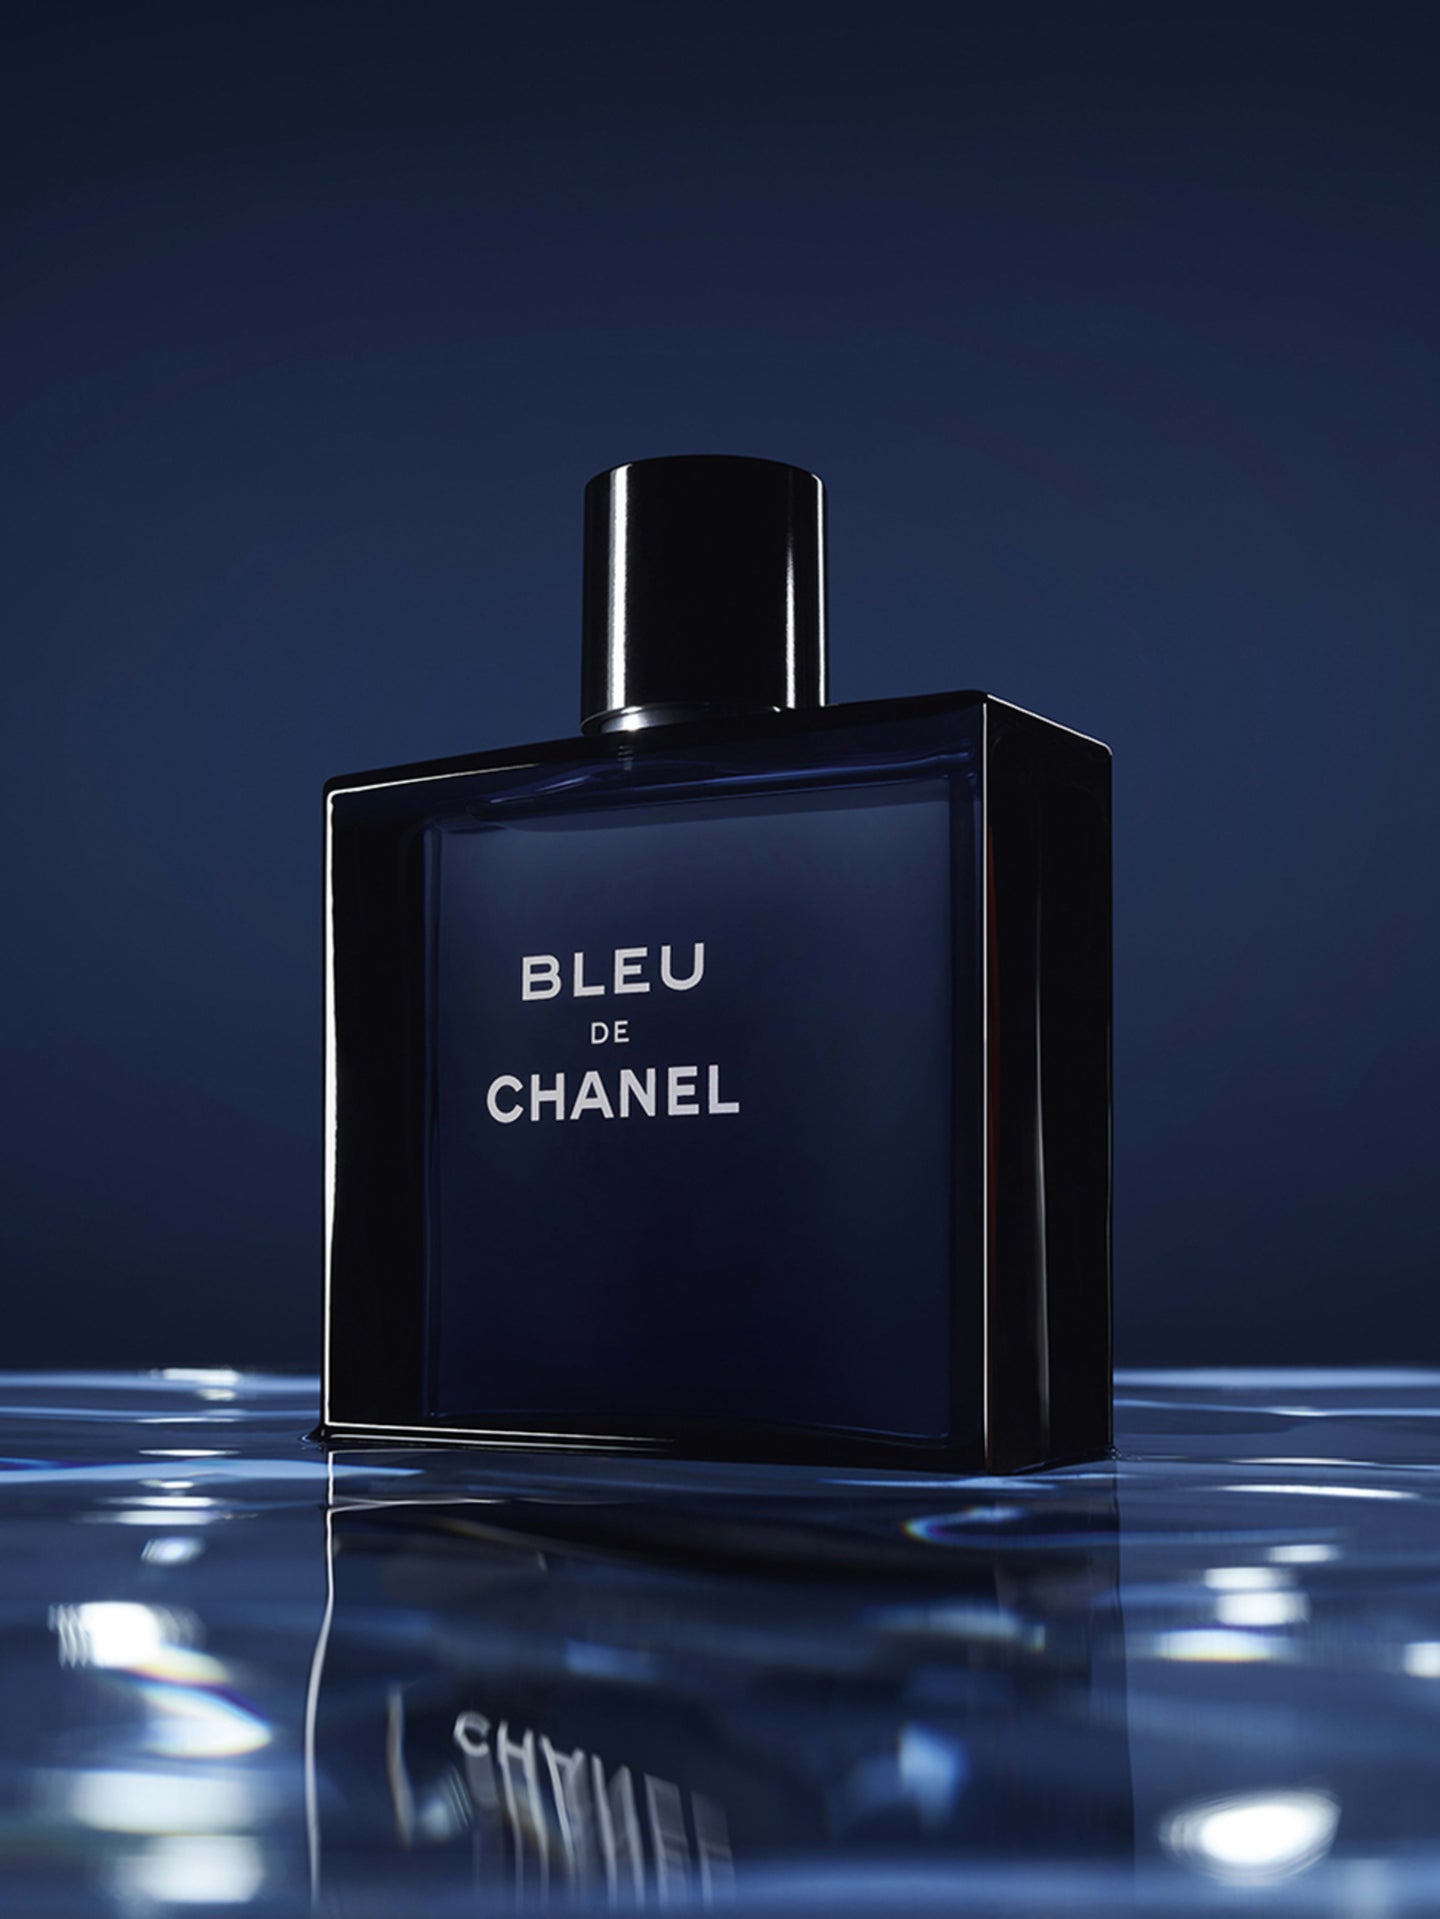 women's chanel blue perfume